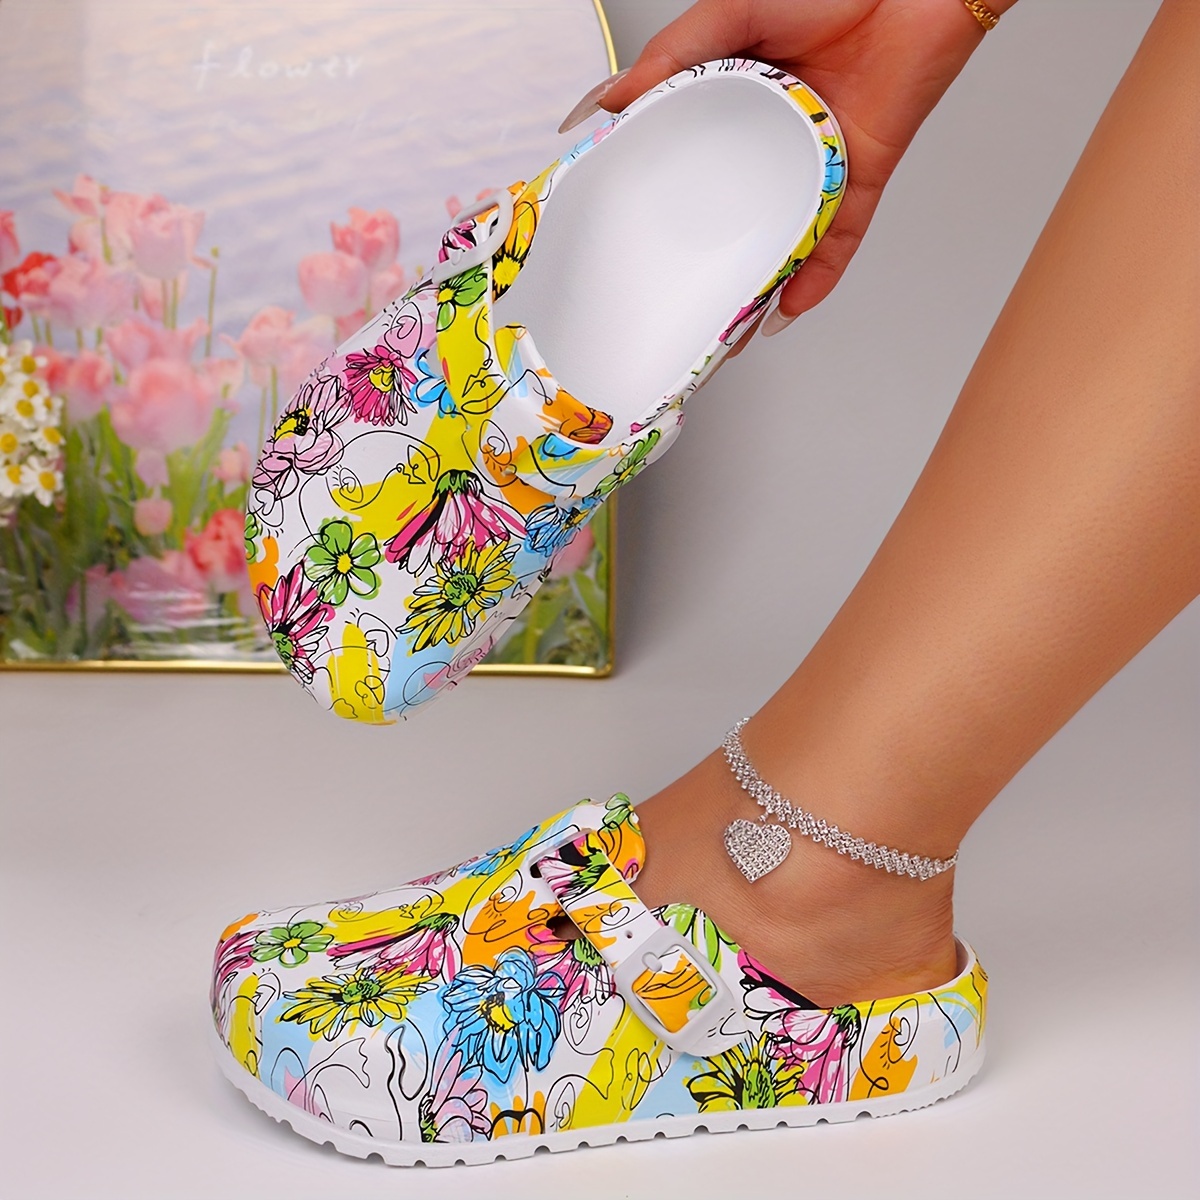 

Women's Stylish Summer Tie-dye Clogs With Floral Designs & Comfortable Platform Sole, Eva Lightweight Slip-on Easy Garden & Beach Shoes